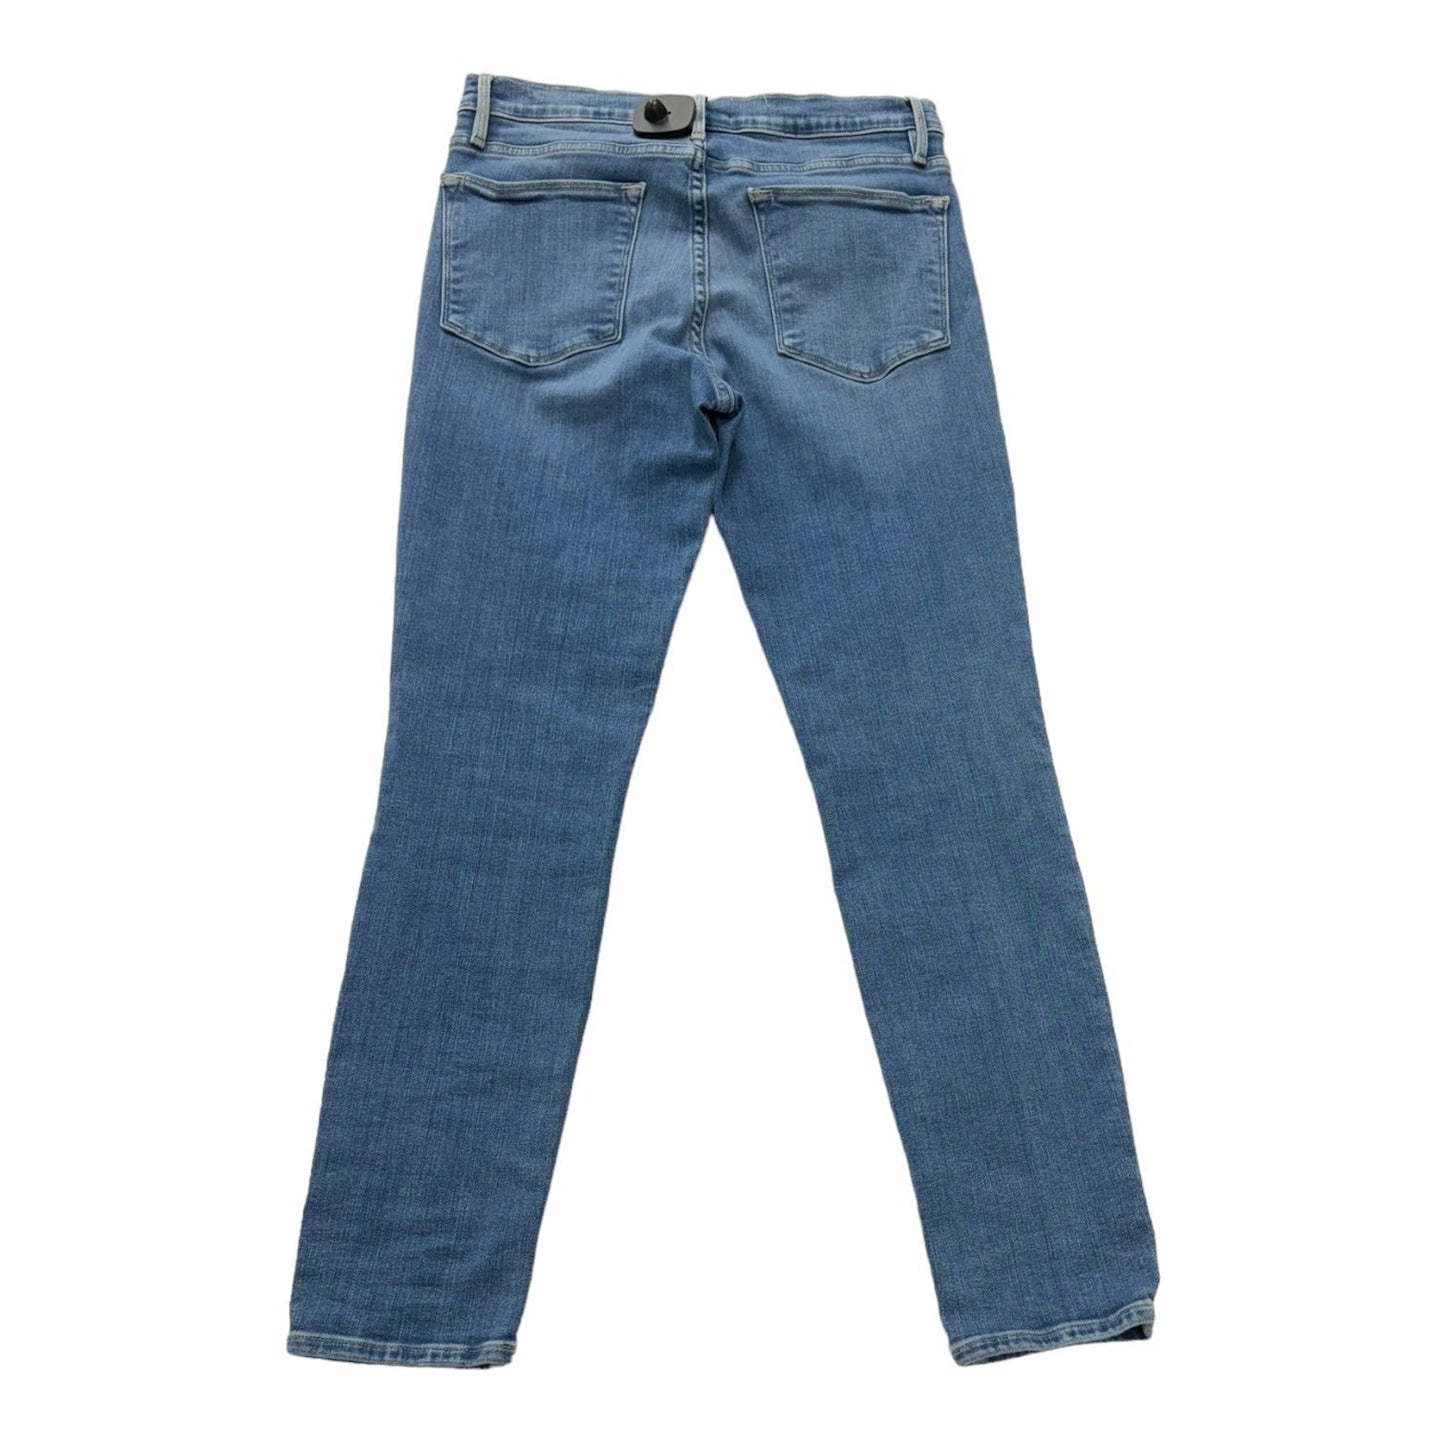 Jeans Skinny By Frame  Size: 8